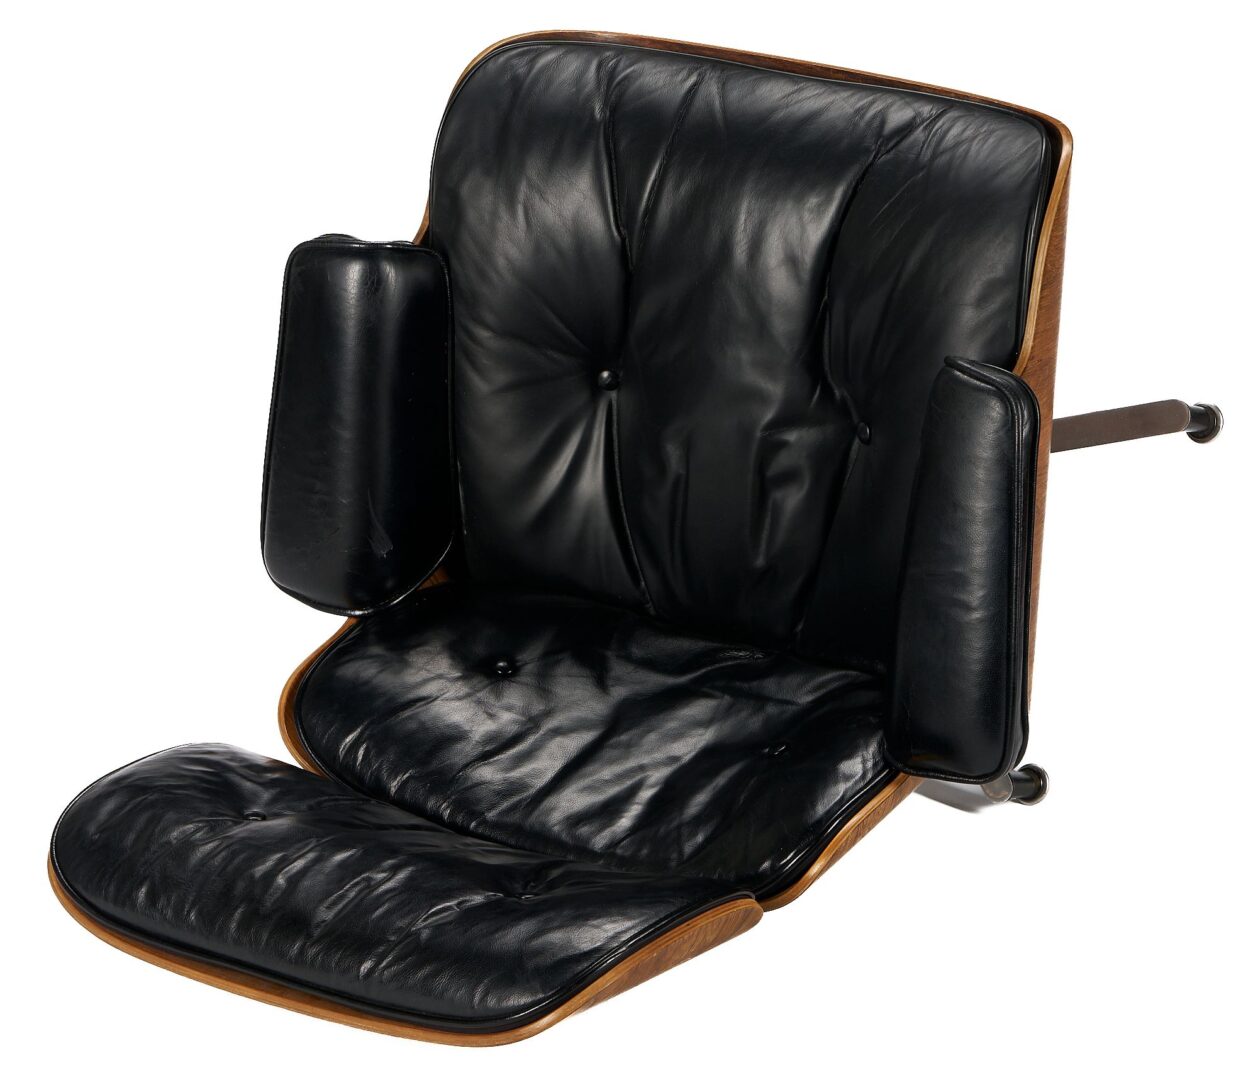 Lot 690: Eames Black Lounge Chair & Ottoman by Herman Miller, Set 2 of 2